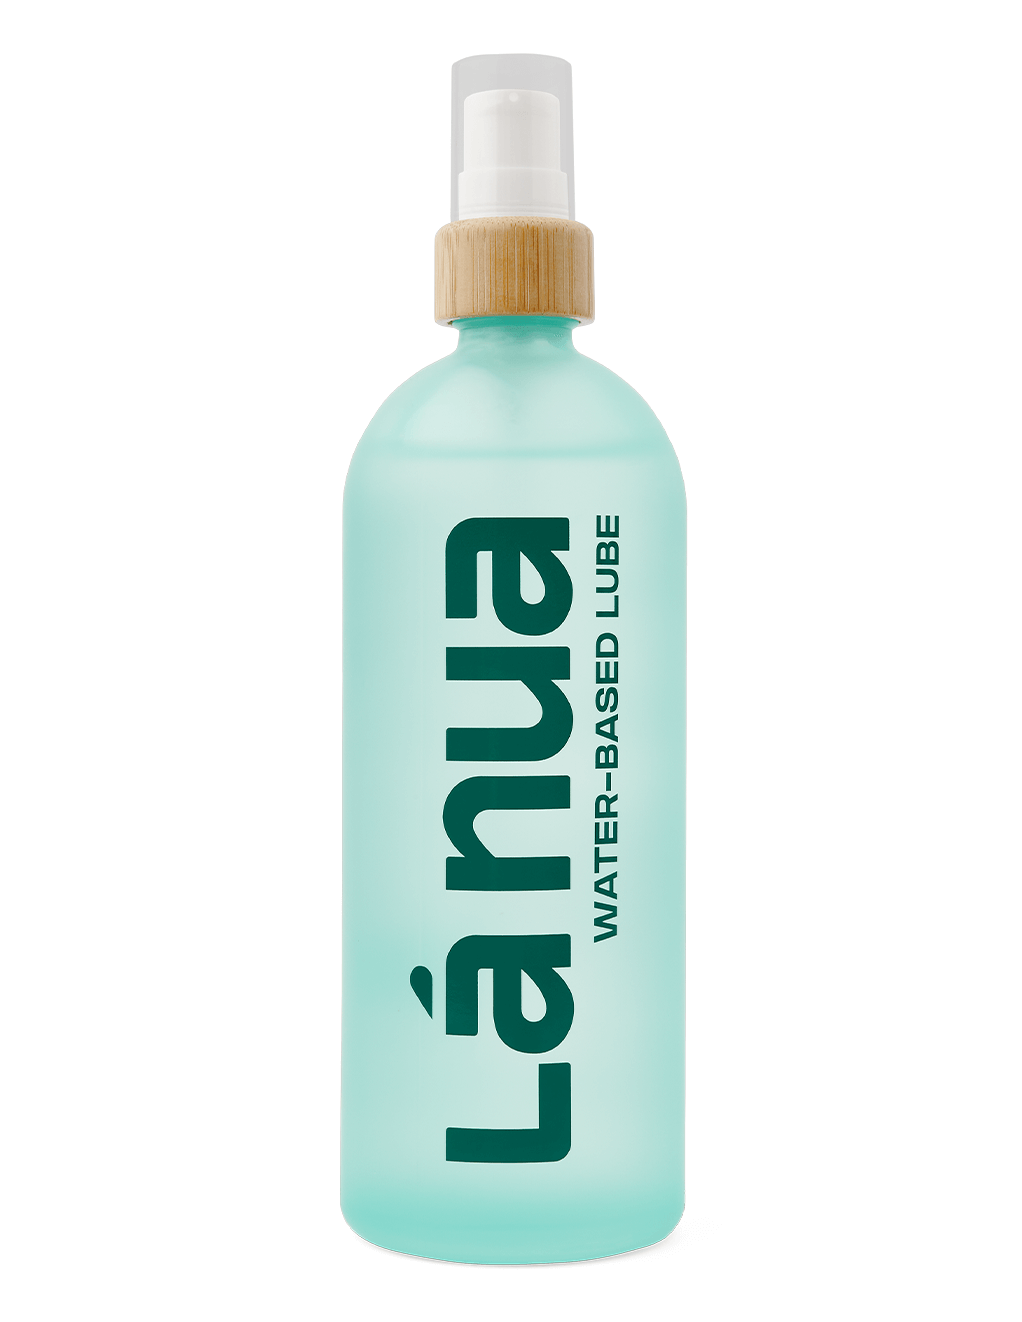 La Nua Water Based Lubricant - 6.8oz